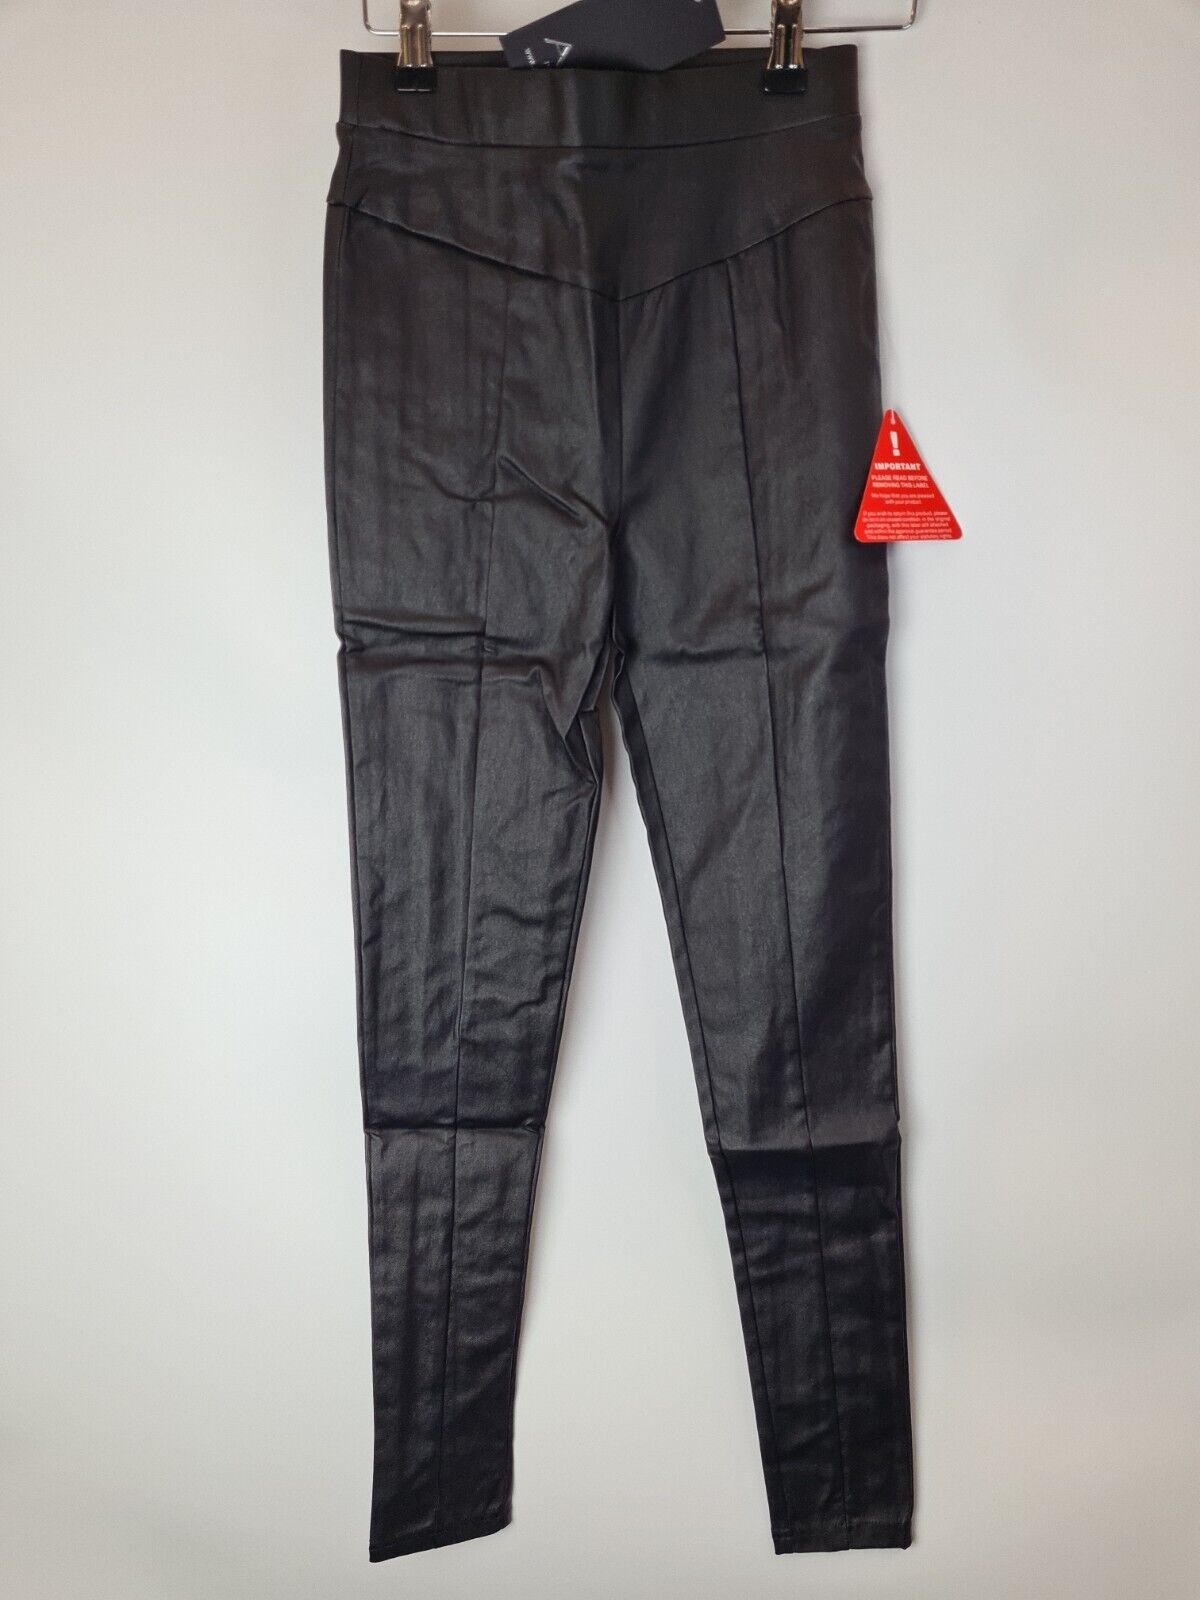 Ax Paris High Waisted Faux Leather Black Leggings Size UK 6 **** V134